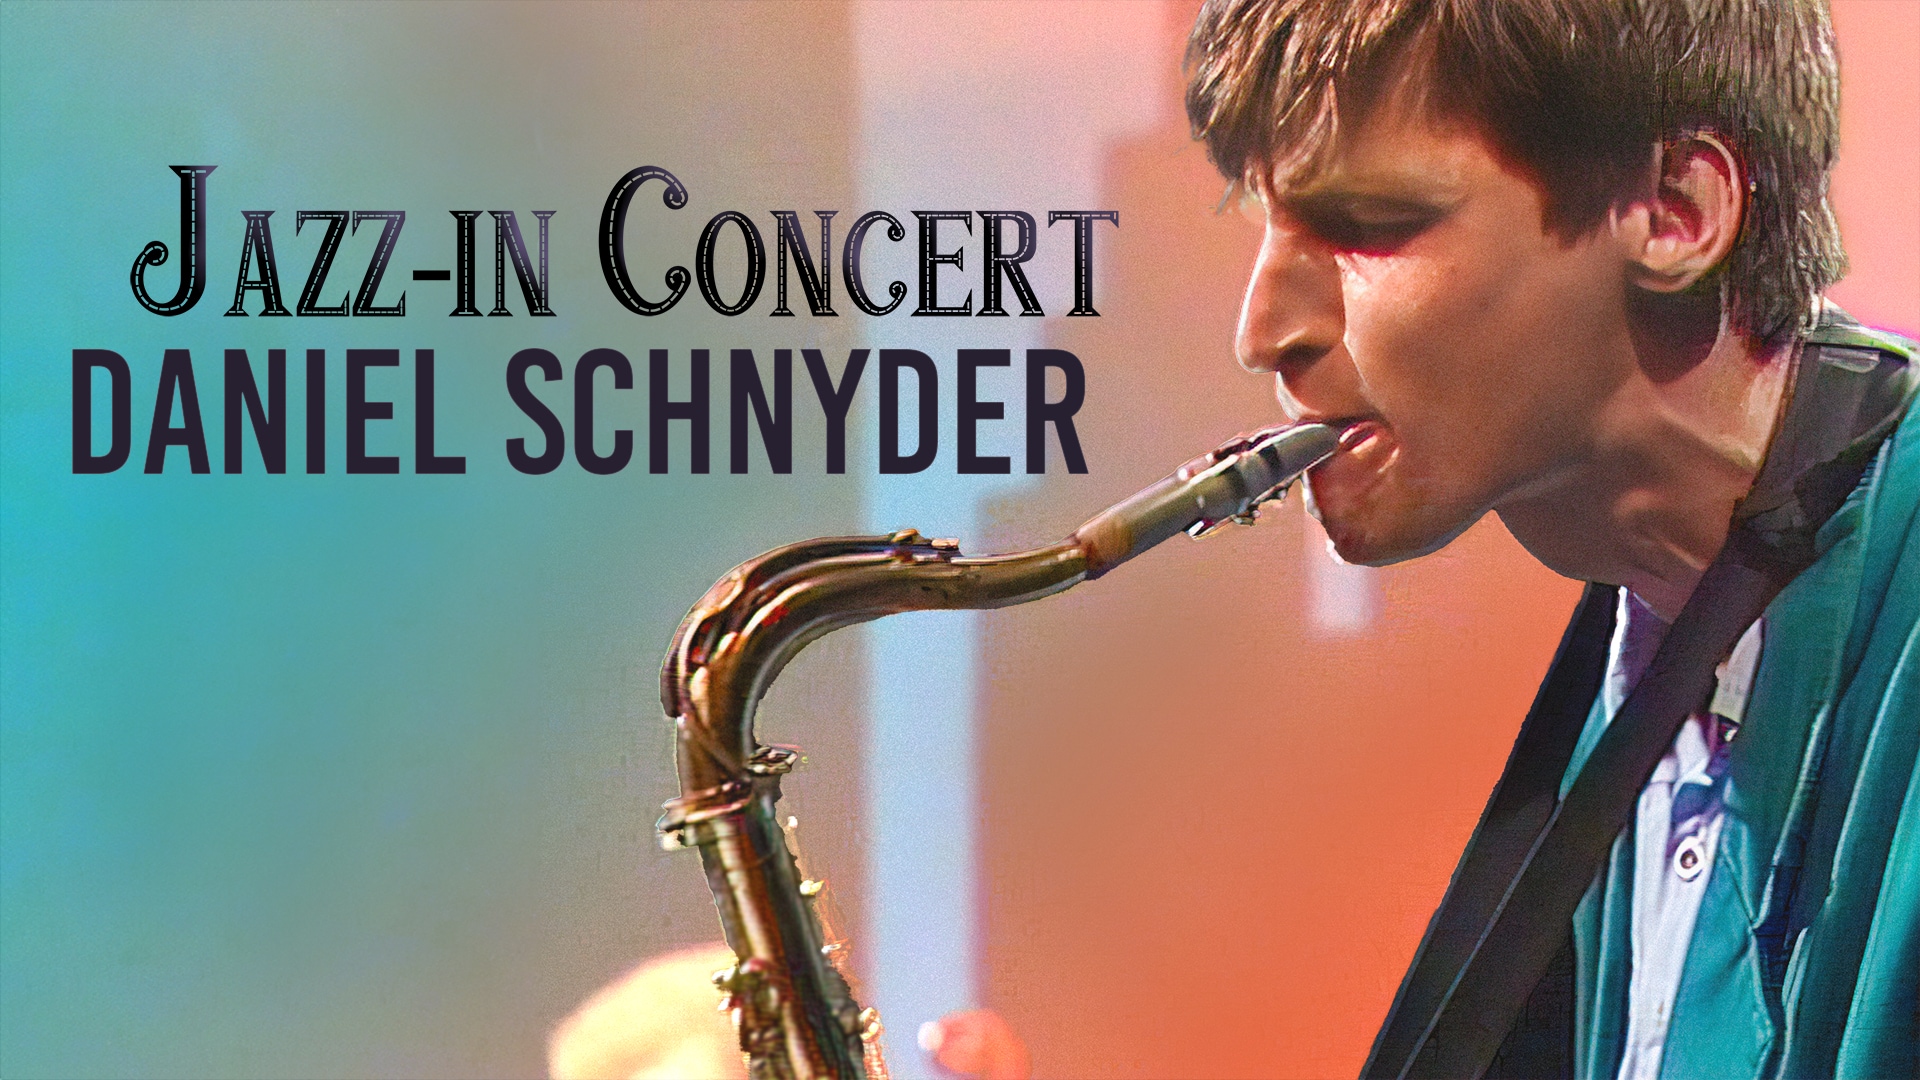 Jazz-in Concert - Daniel Schnyder